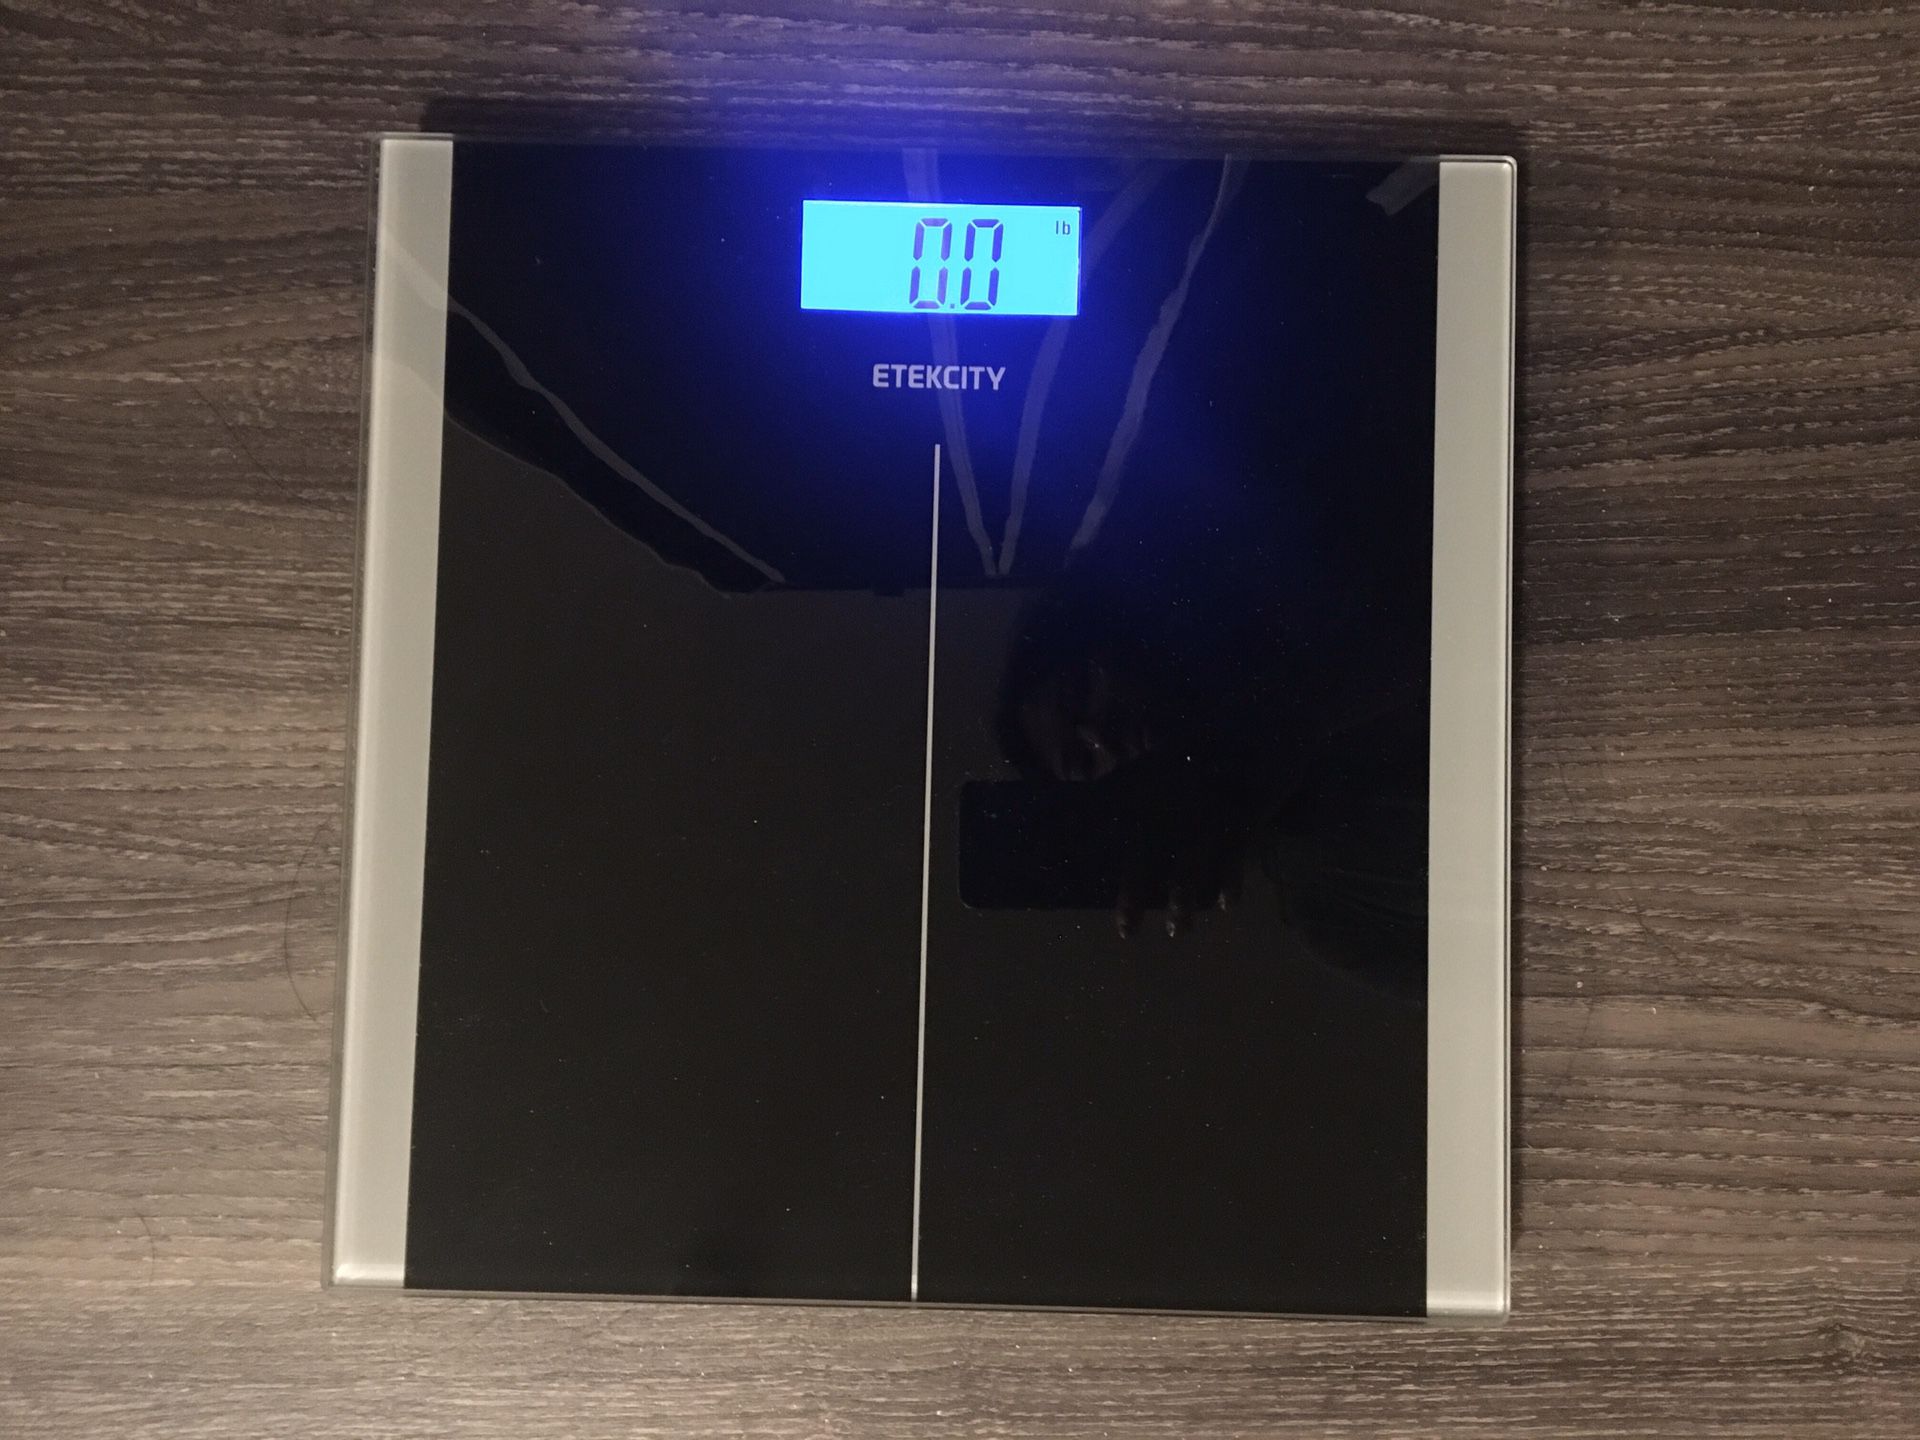 Etekcity digital body weight scales - new